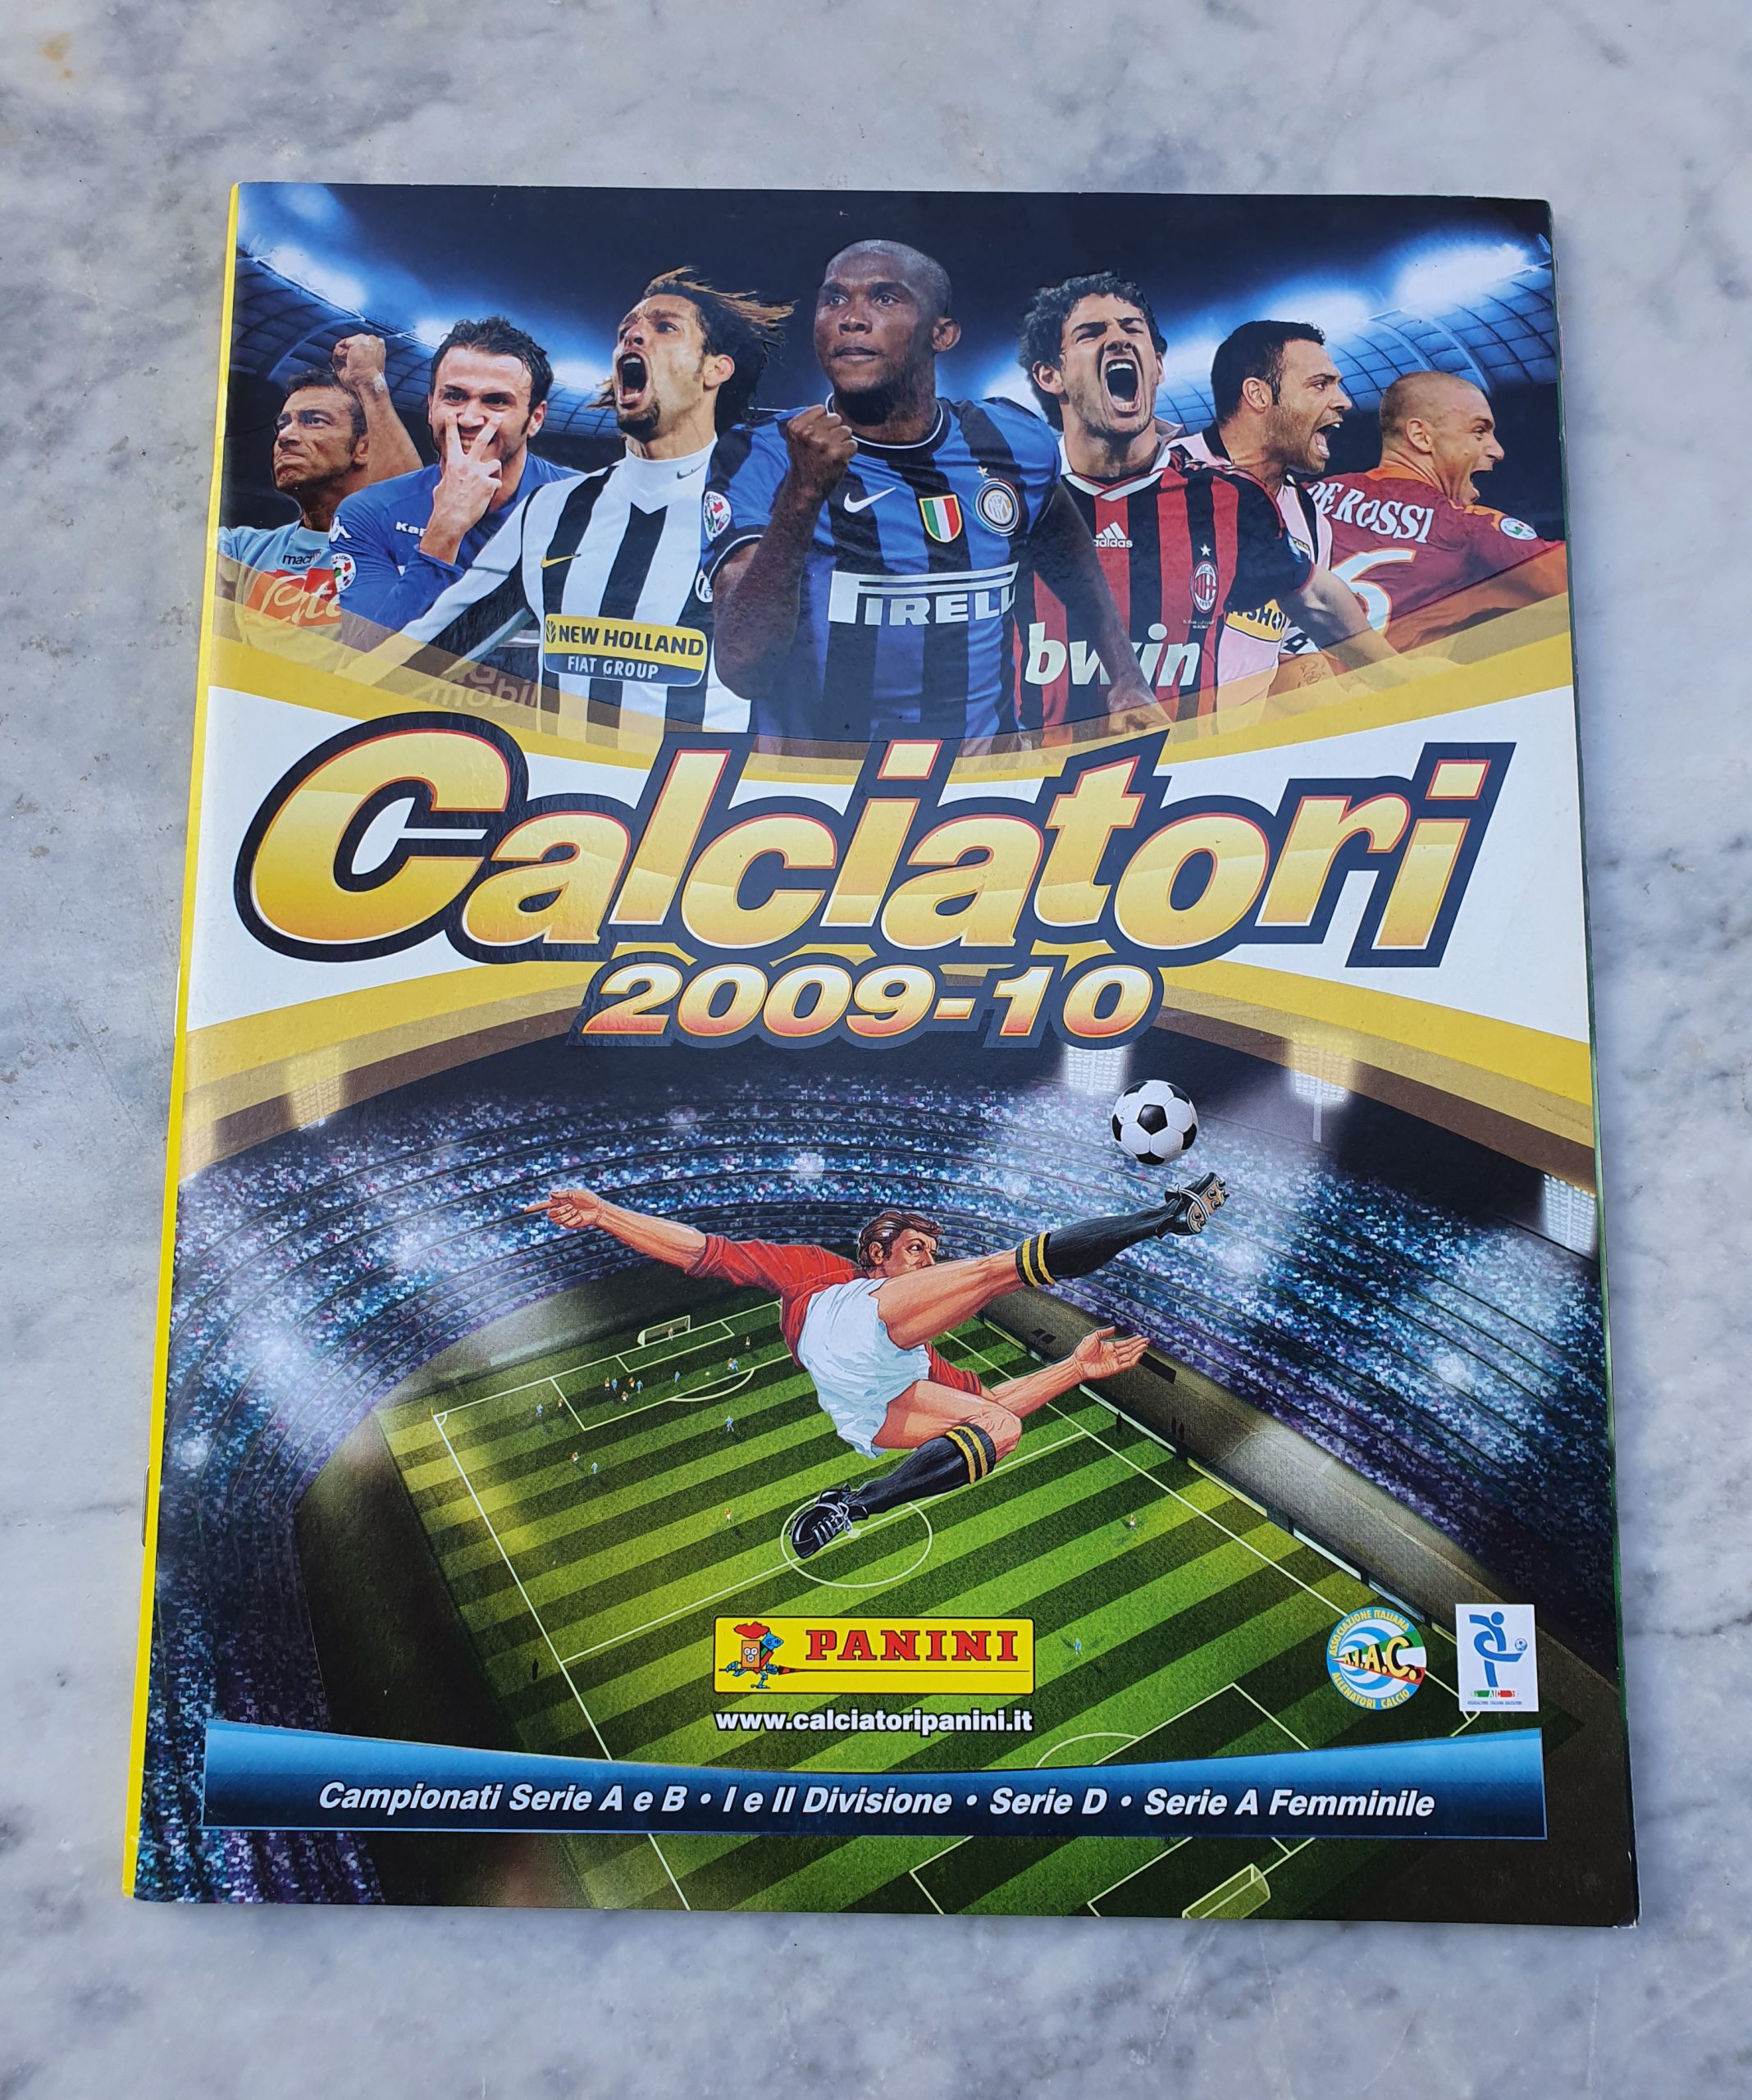 Album Panini 2009-10 Calciatori » BOLA Football Store